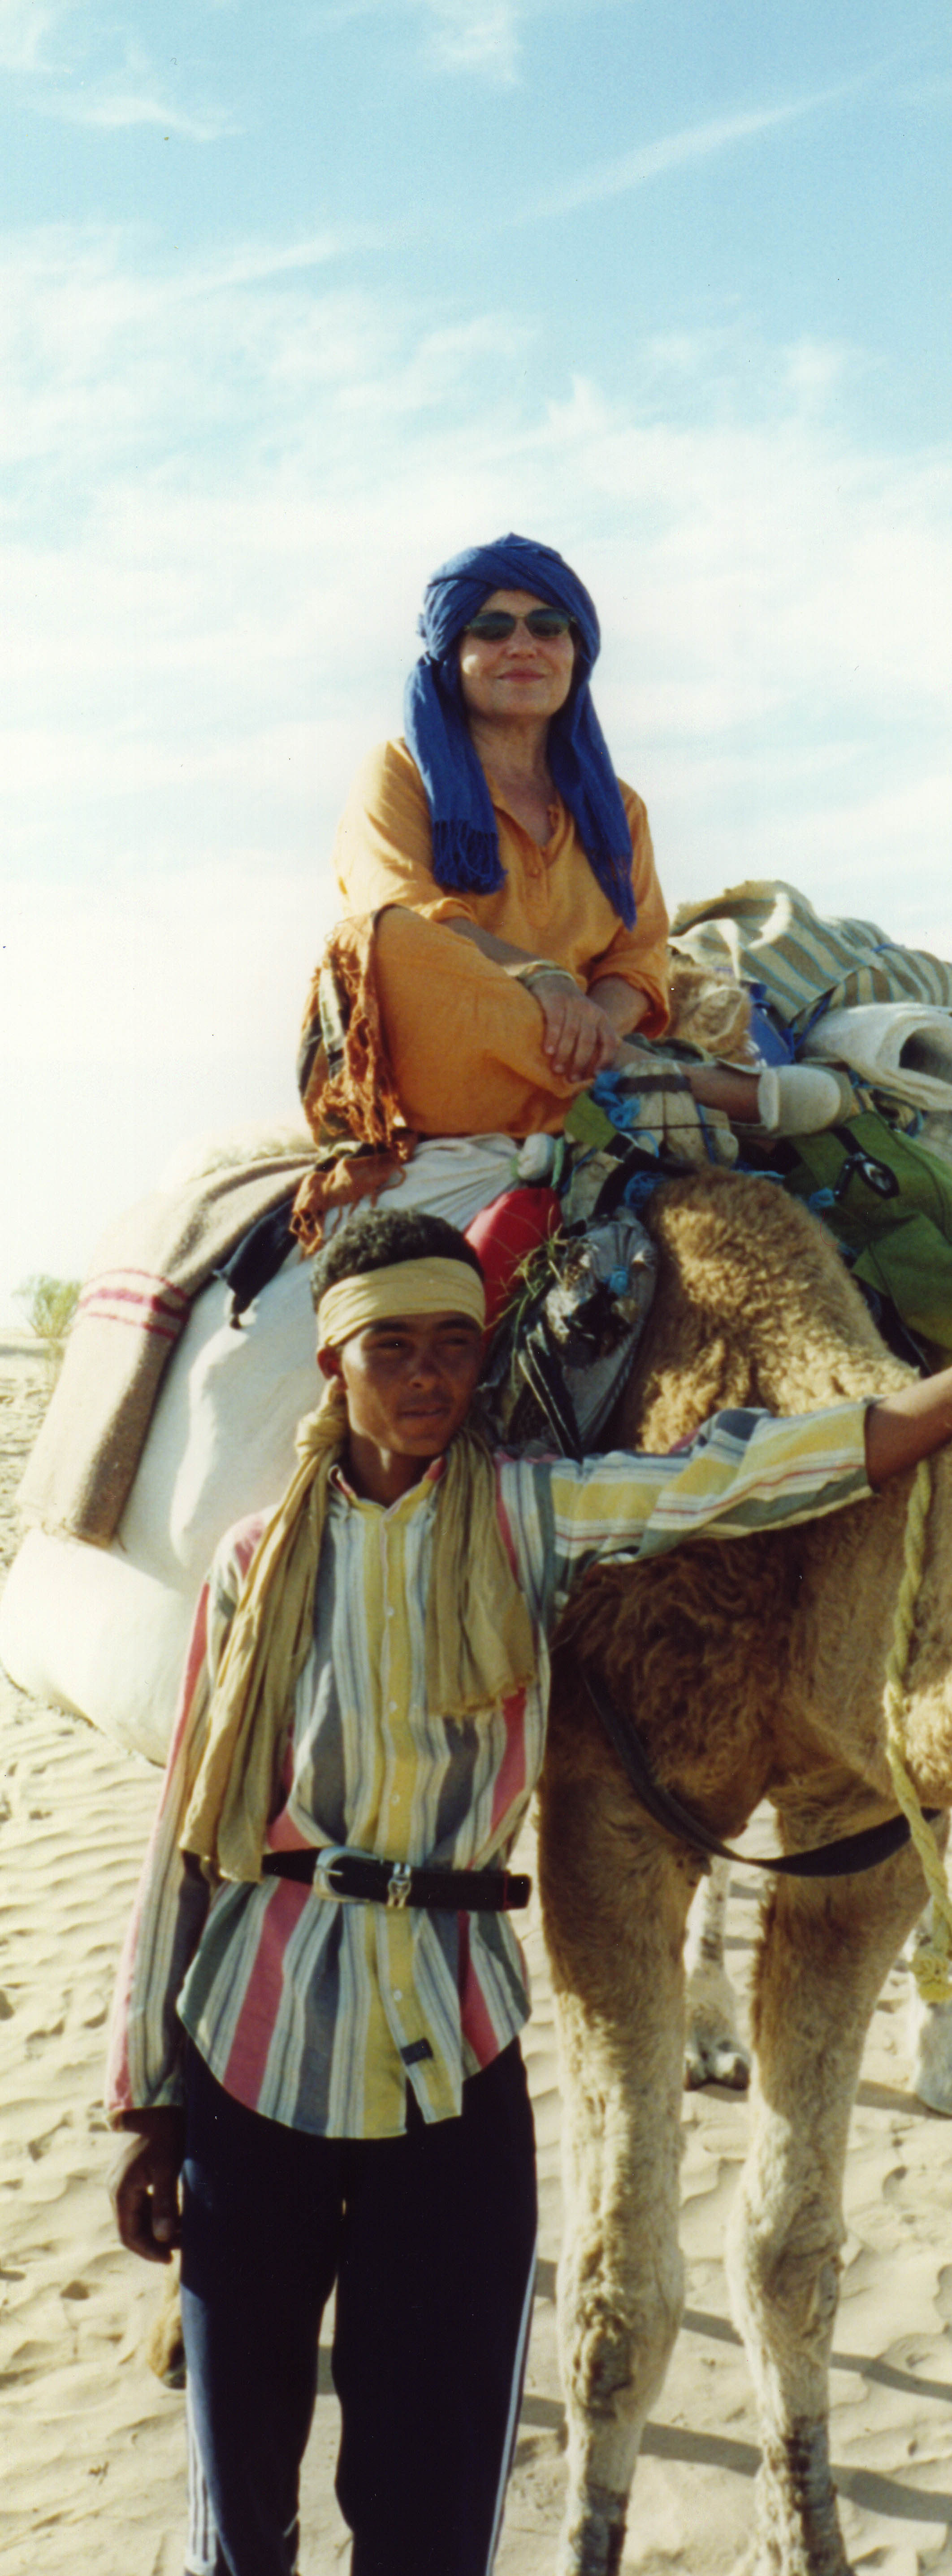 Me on a camel.jpg